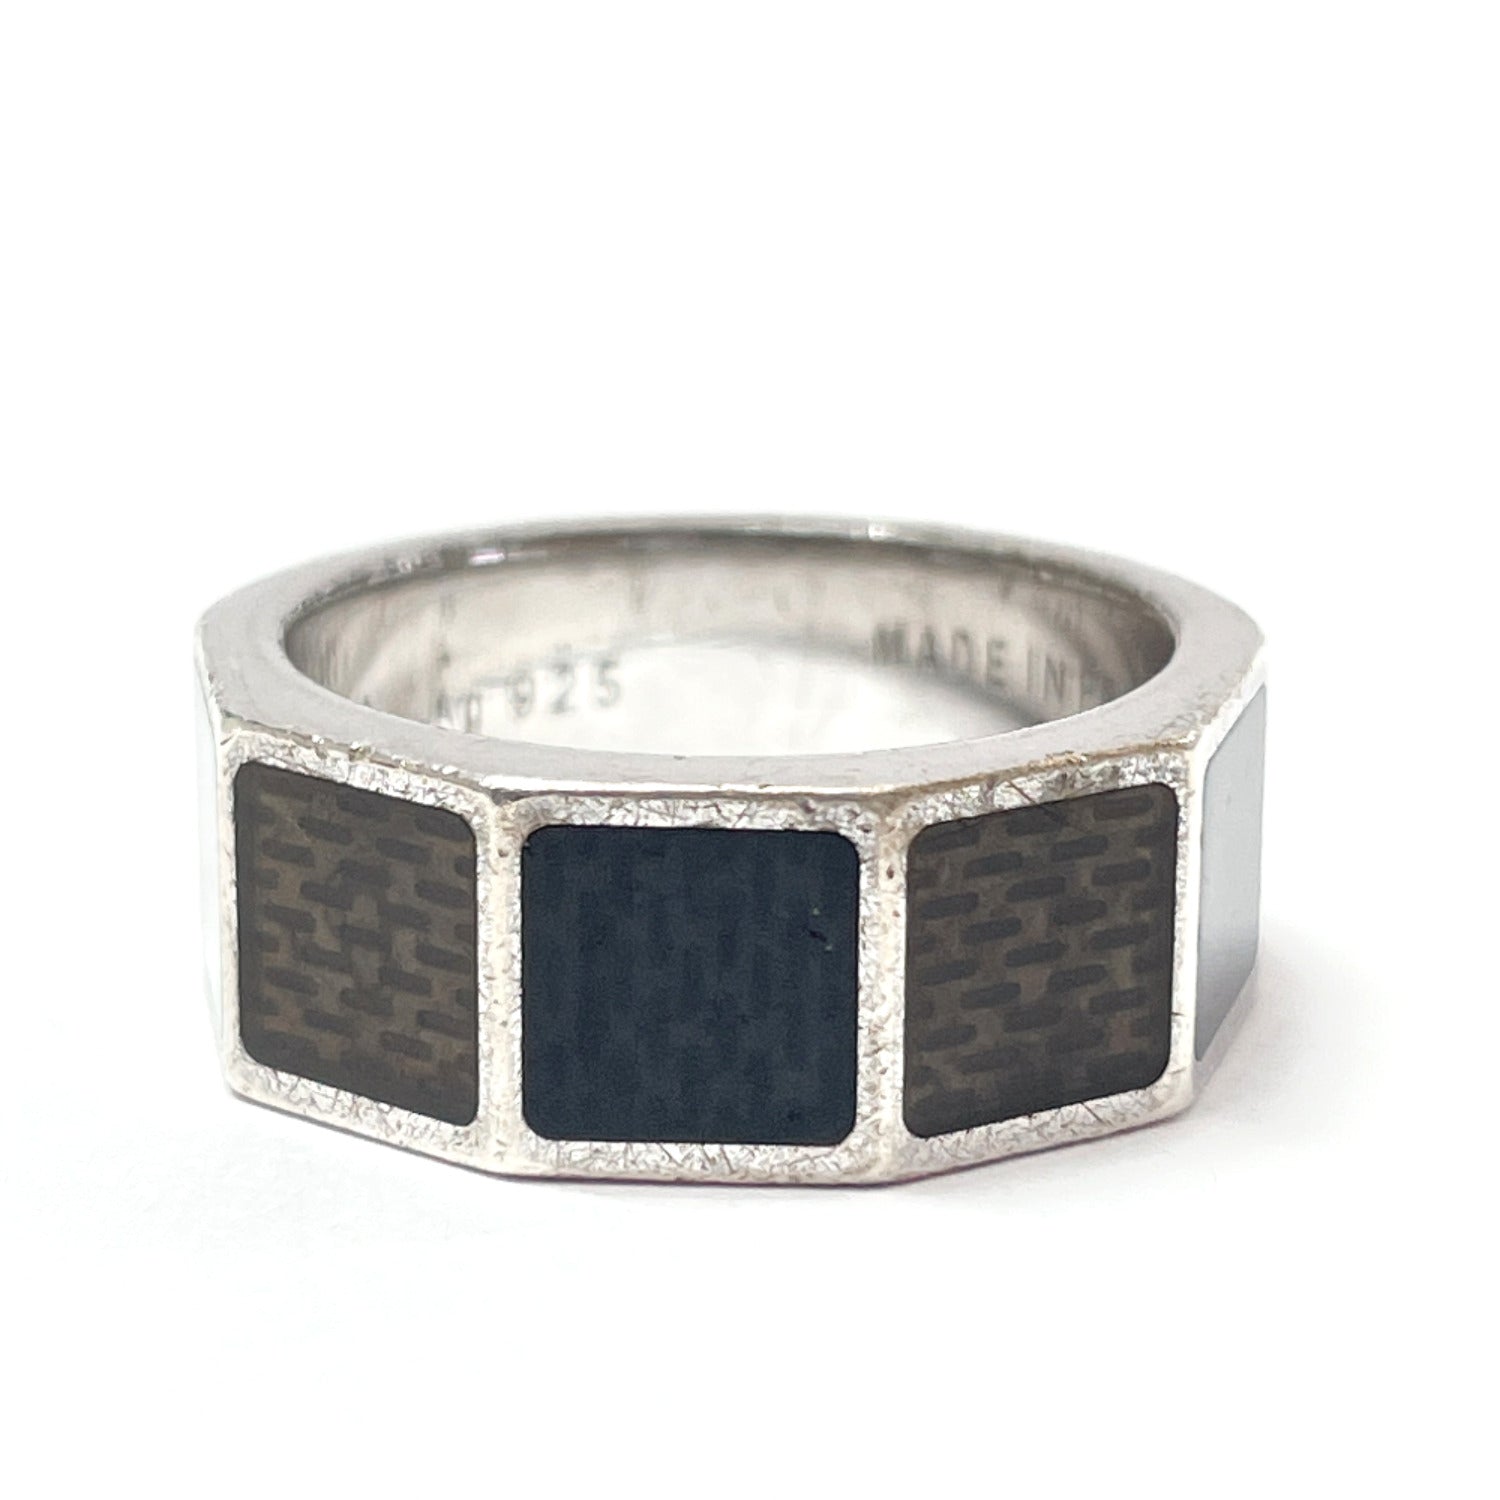 Shop Louis Vuitton DAMIER Damier black ring (M62493, M62494) by